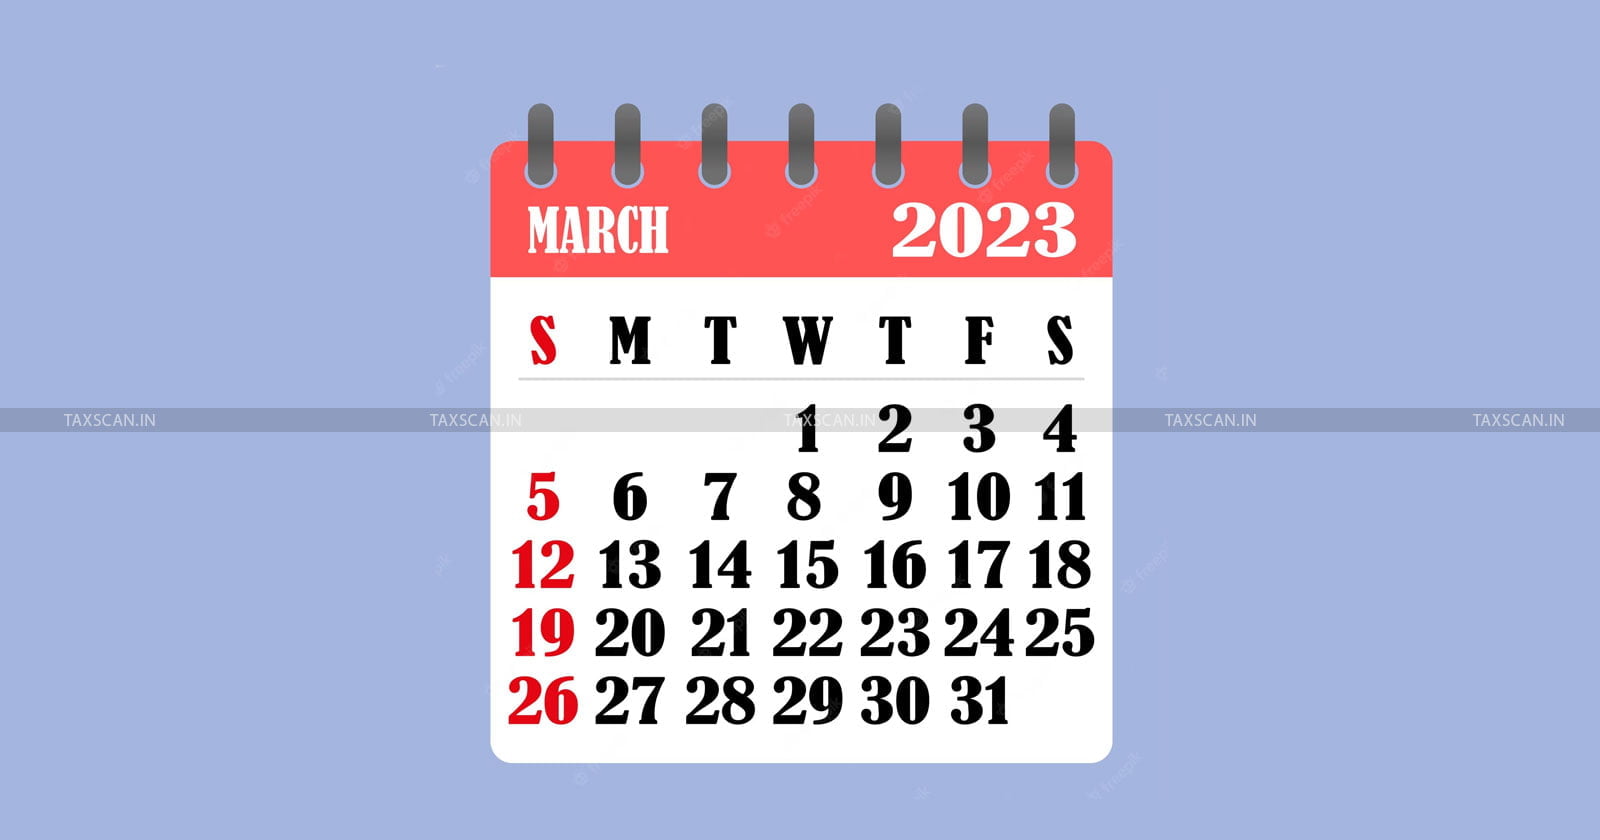 GST Compliance - GST March Compliance - March 2023 - GST March 2023 compliance Checklist - compliance of GST for March 2023 - Due Dates for GST Compliances - Due Dates - GST - Taxscan